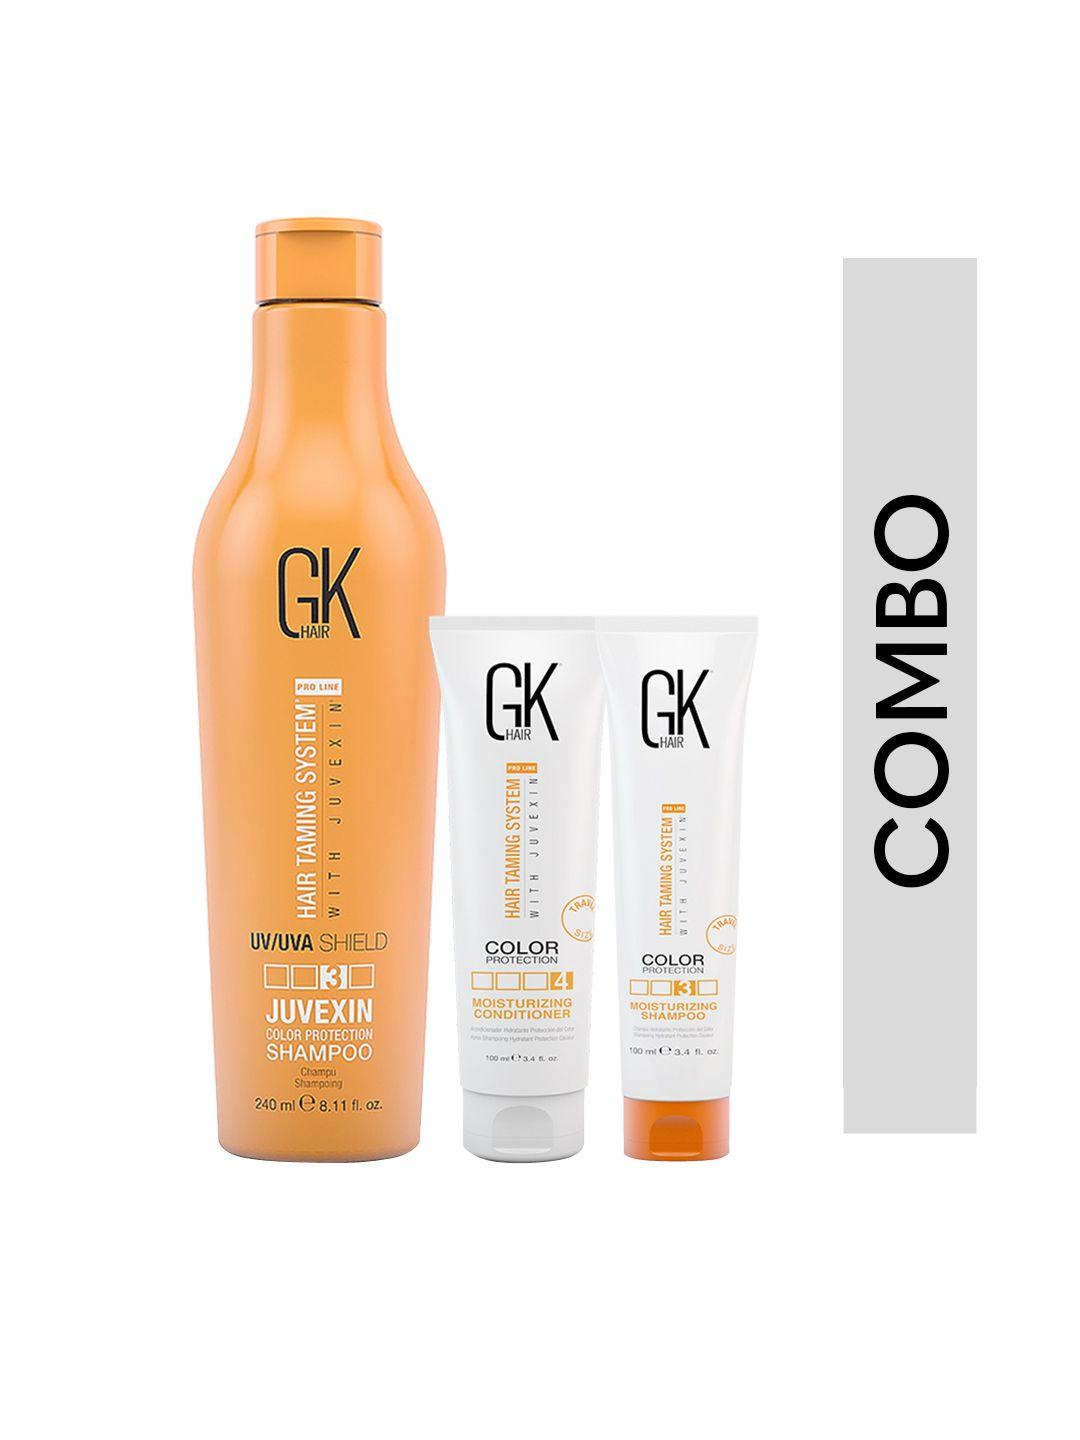 gk hair set of moisturizing shampoo & conditioner 100ml each + color shield shampoo 240ml